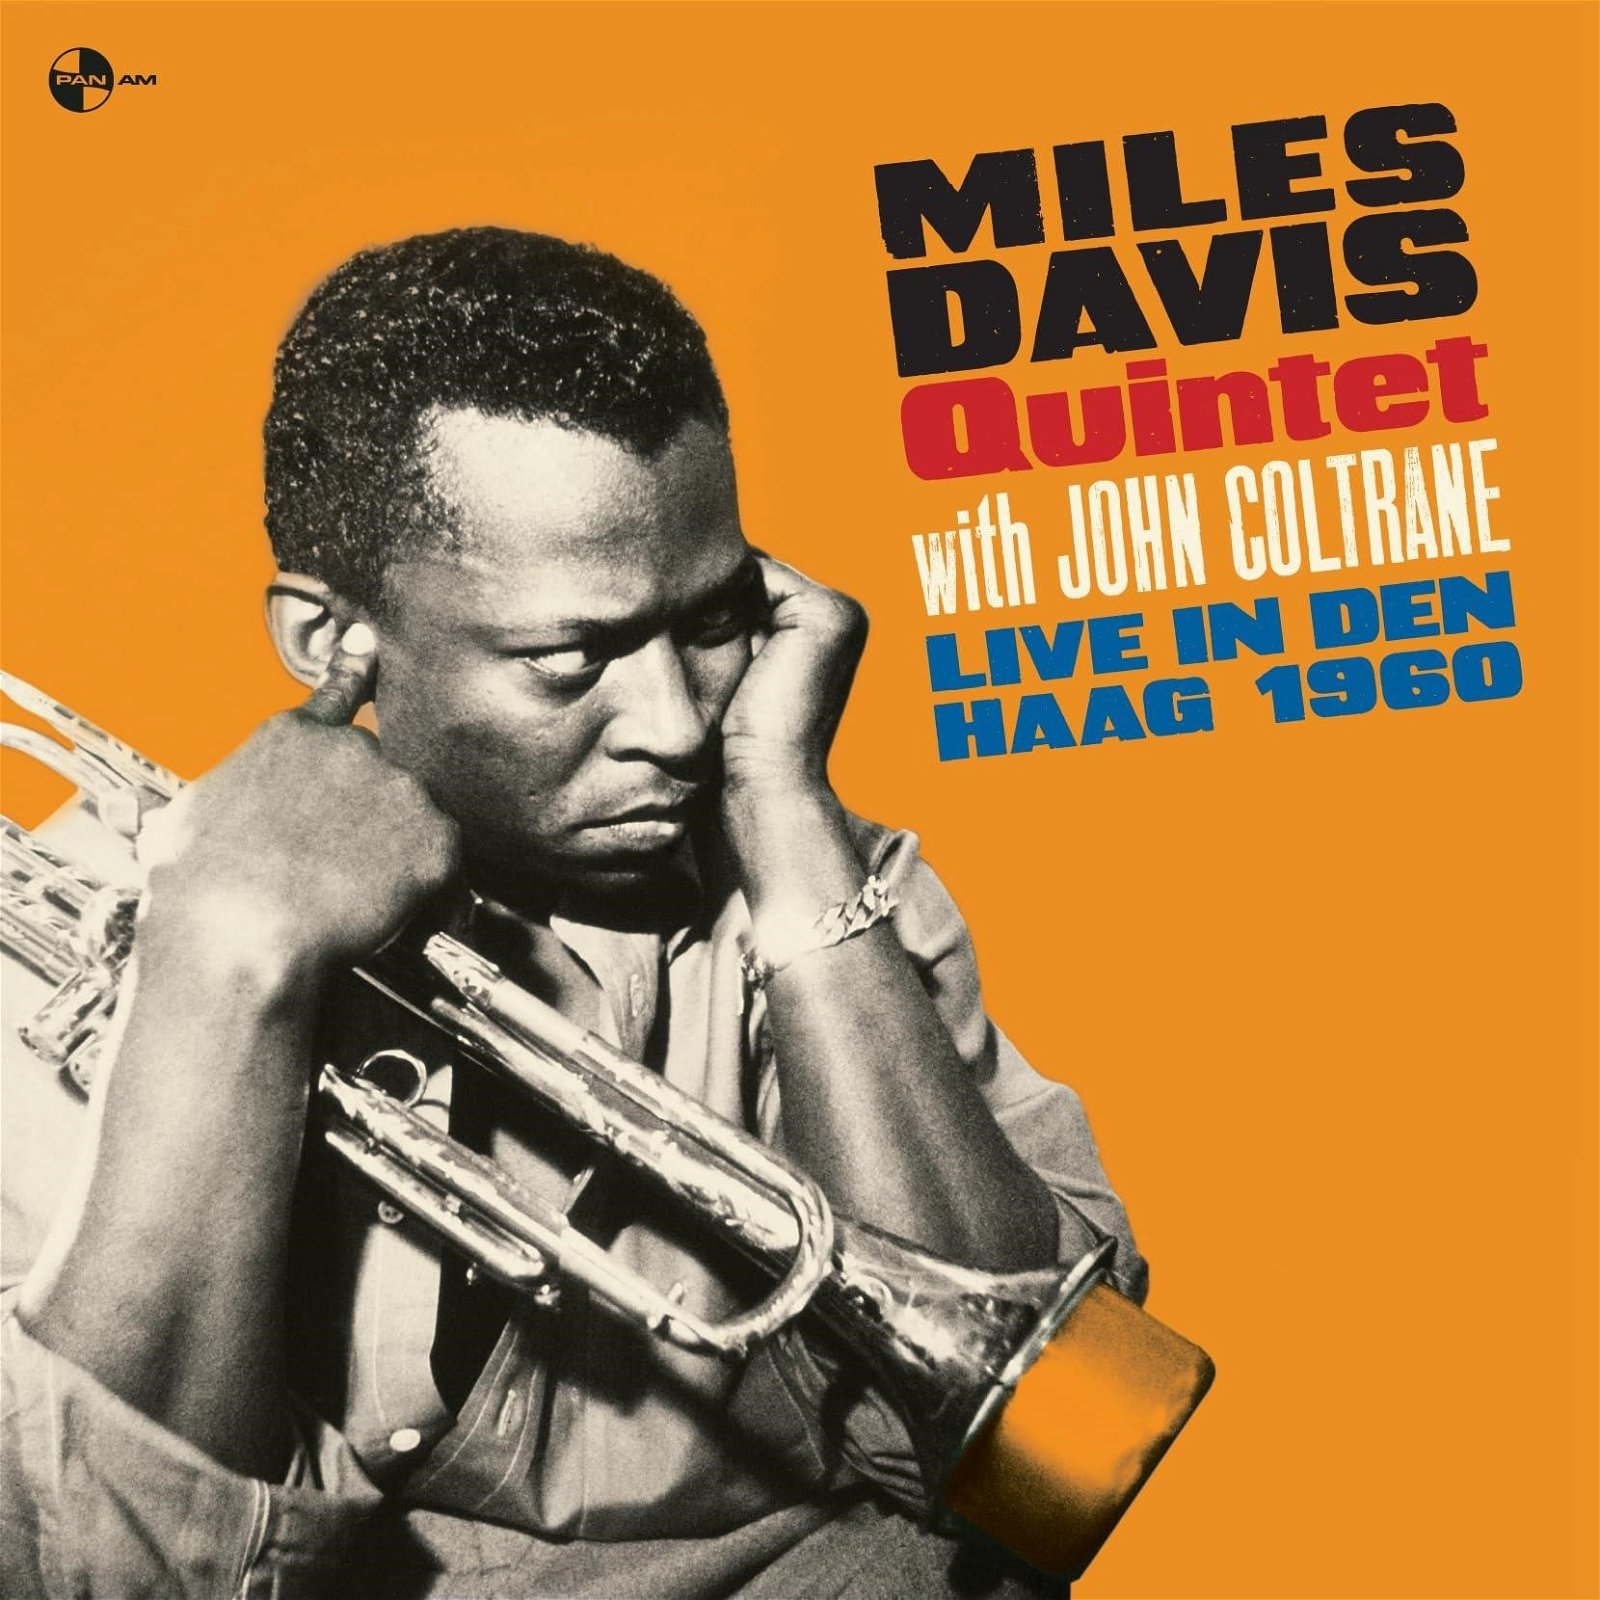 CD Shop - MILES DAVIS QUINTET & ... LIVE IN DEN HAAG - 1960